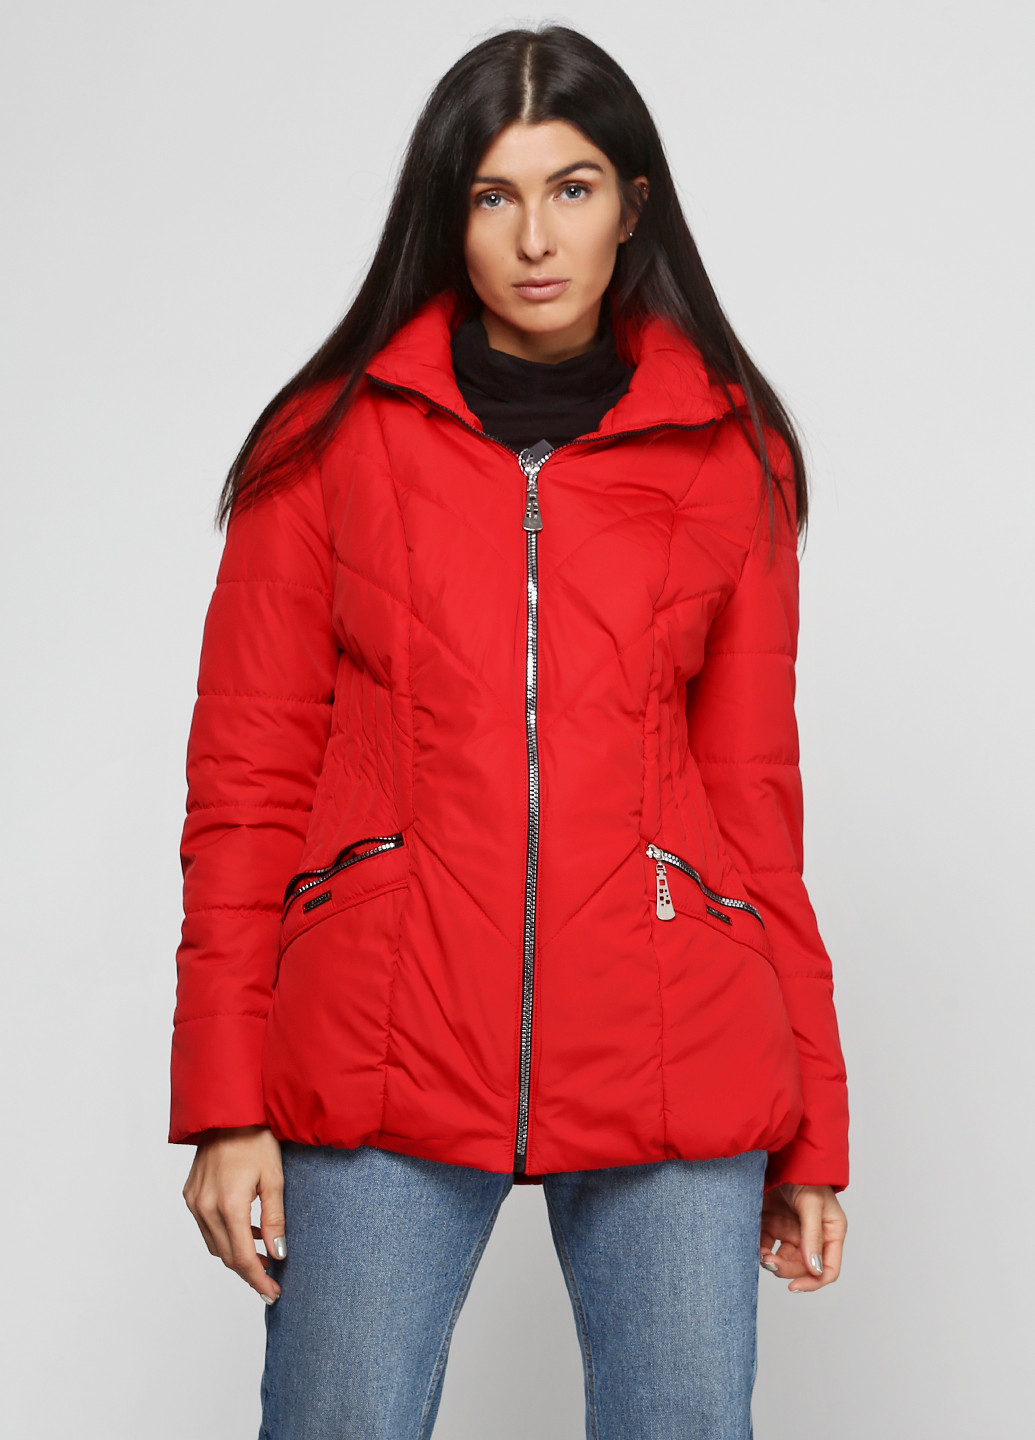 Червона зимня куртка Westland